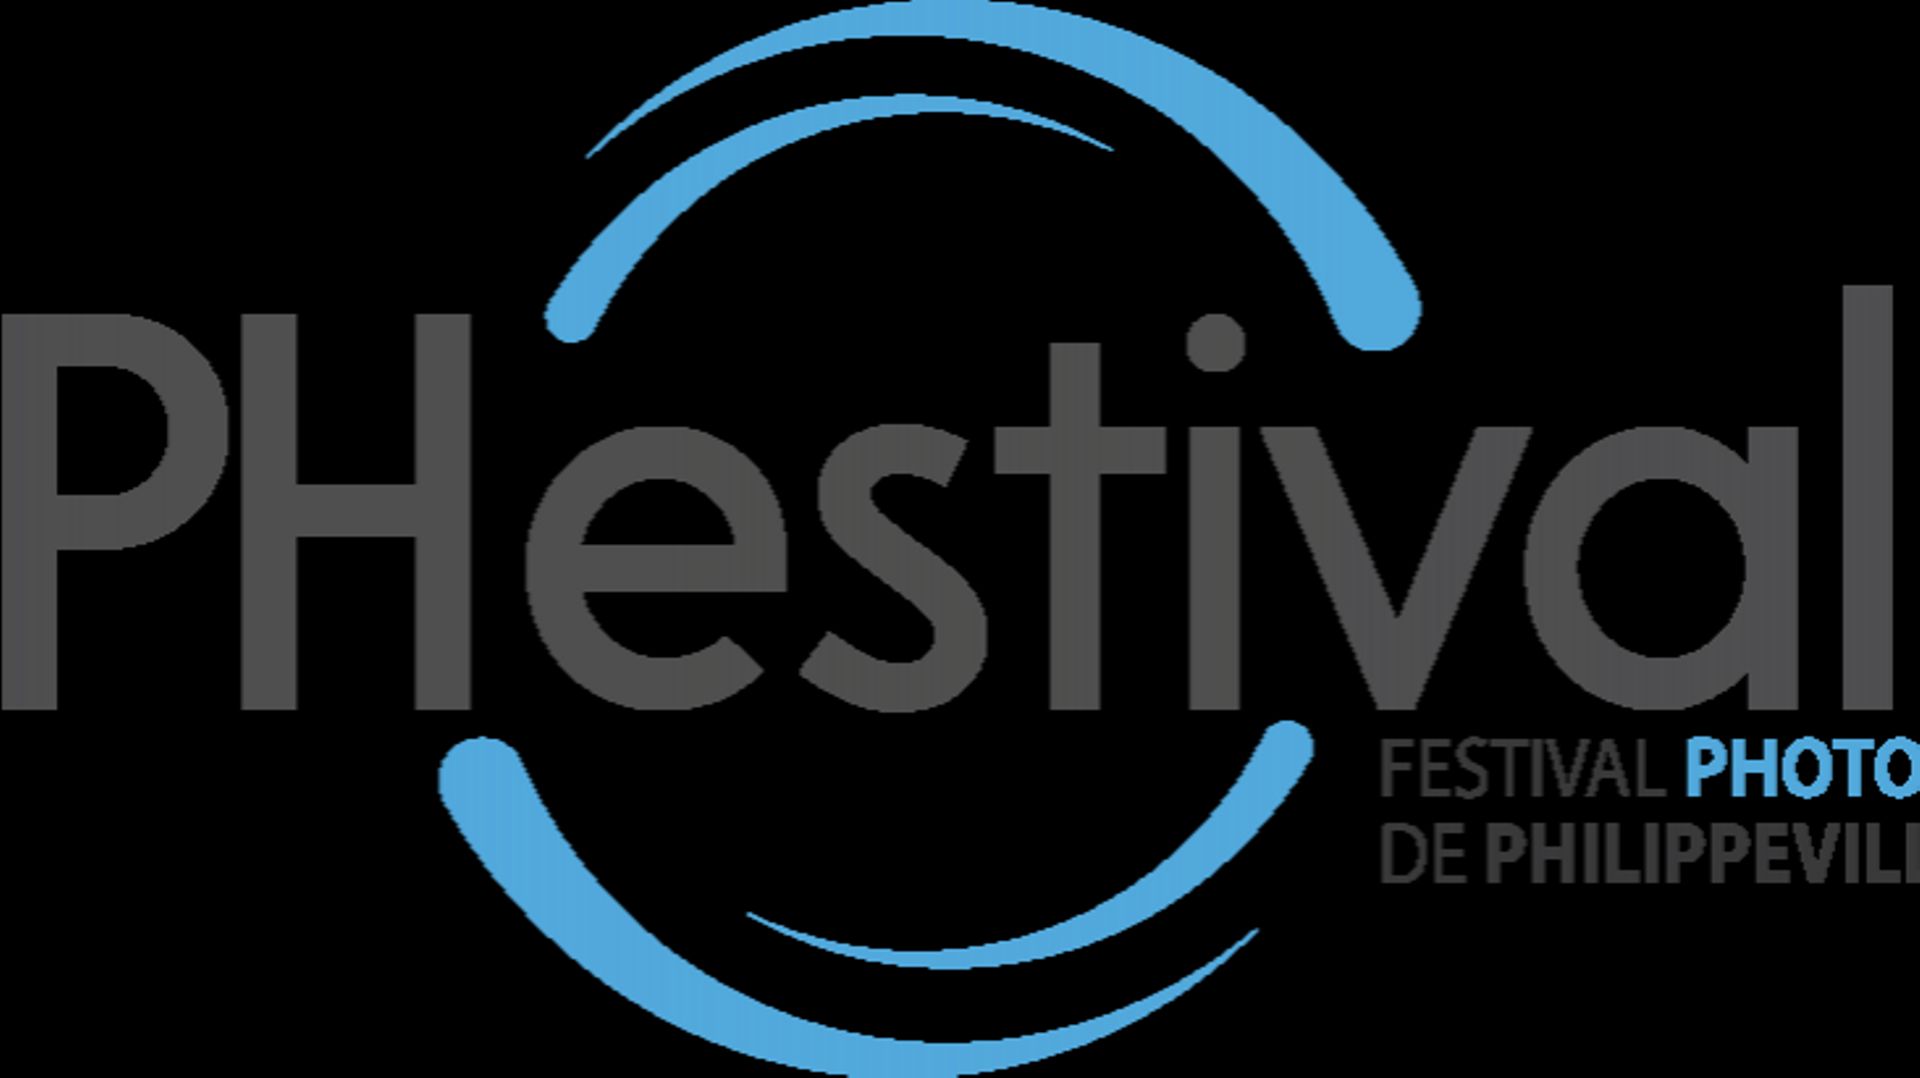 PHestival Festival Photo de Philippeville